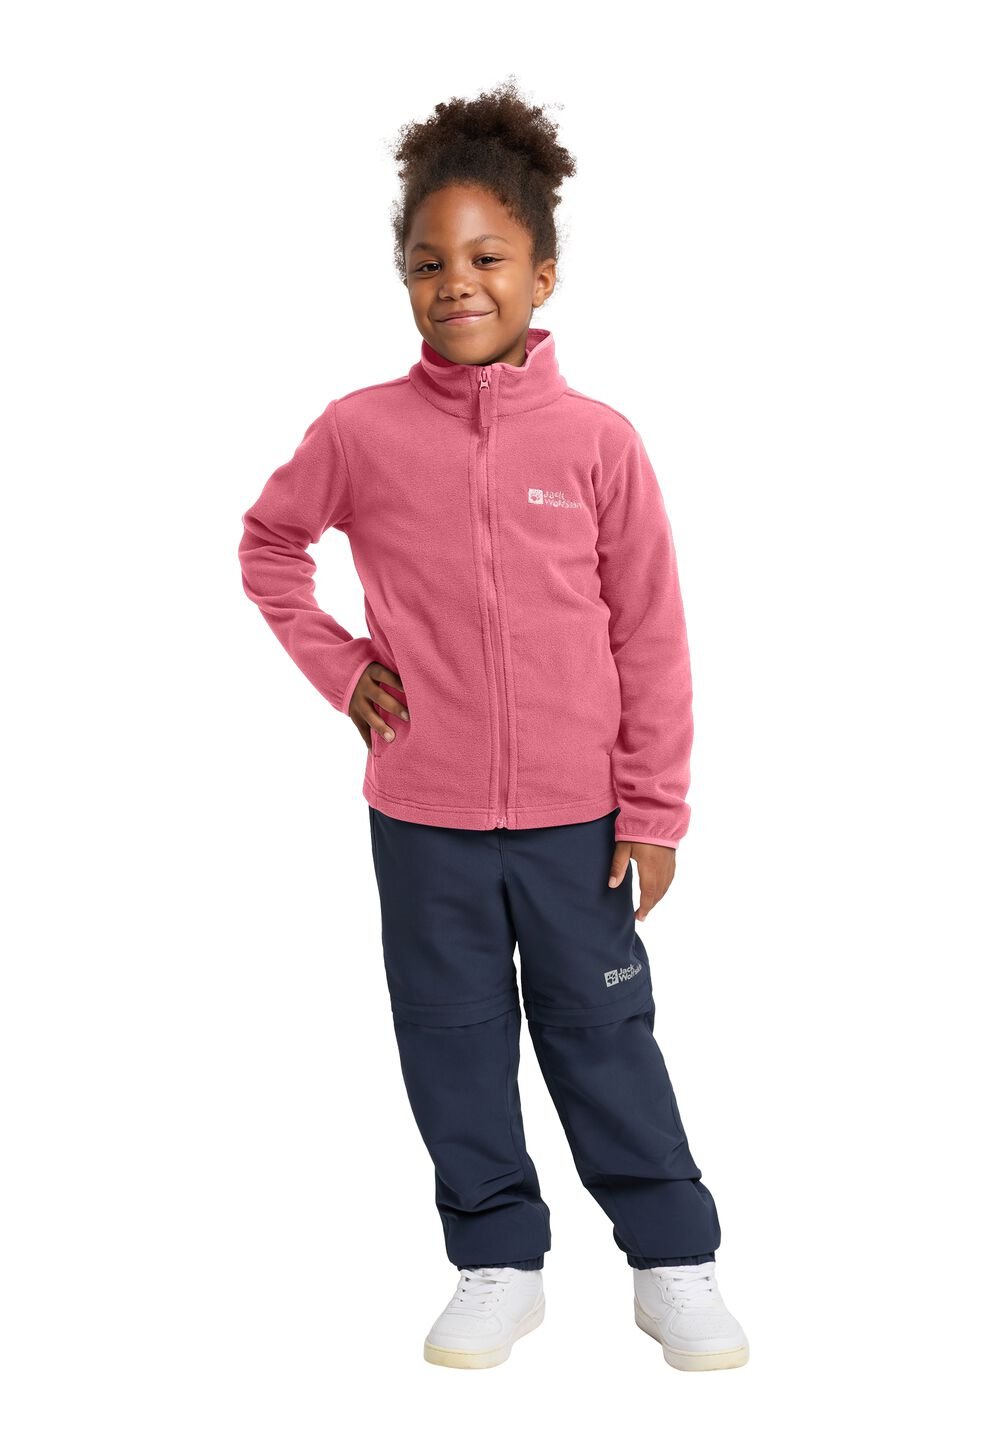 Jack Wolfskin Taunus Jacket Kids Fleece jack Kinderen 104 soft pink soft pink